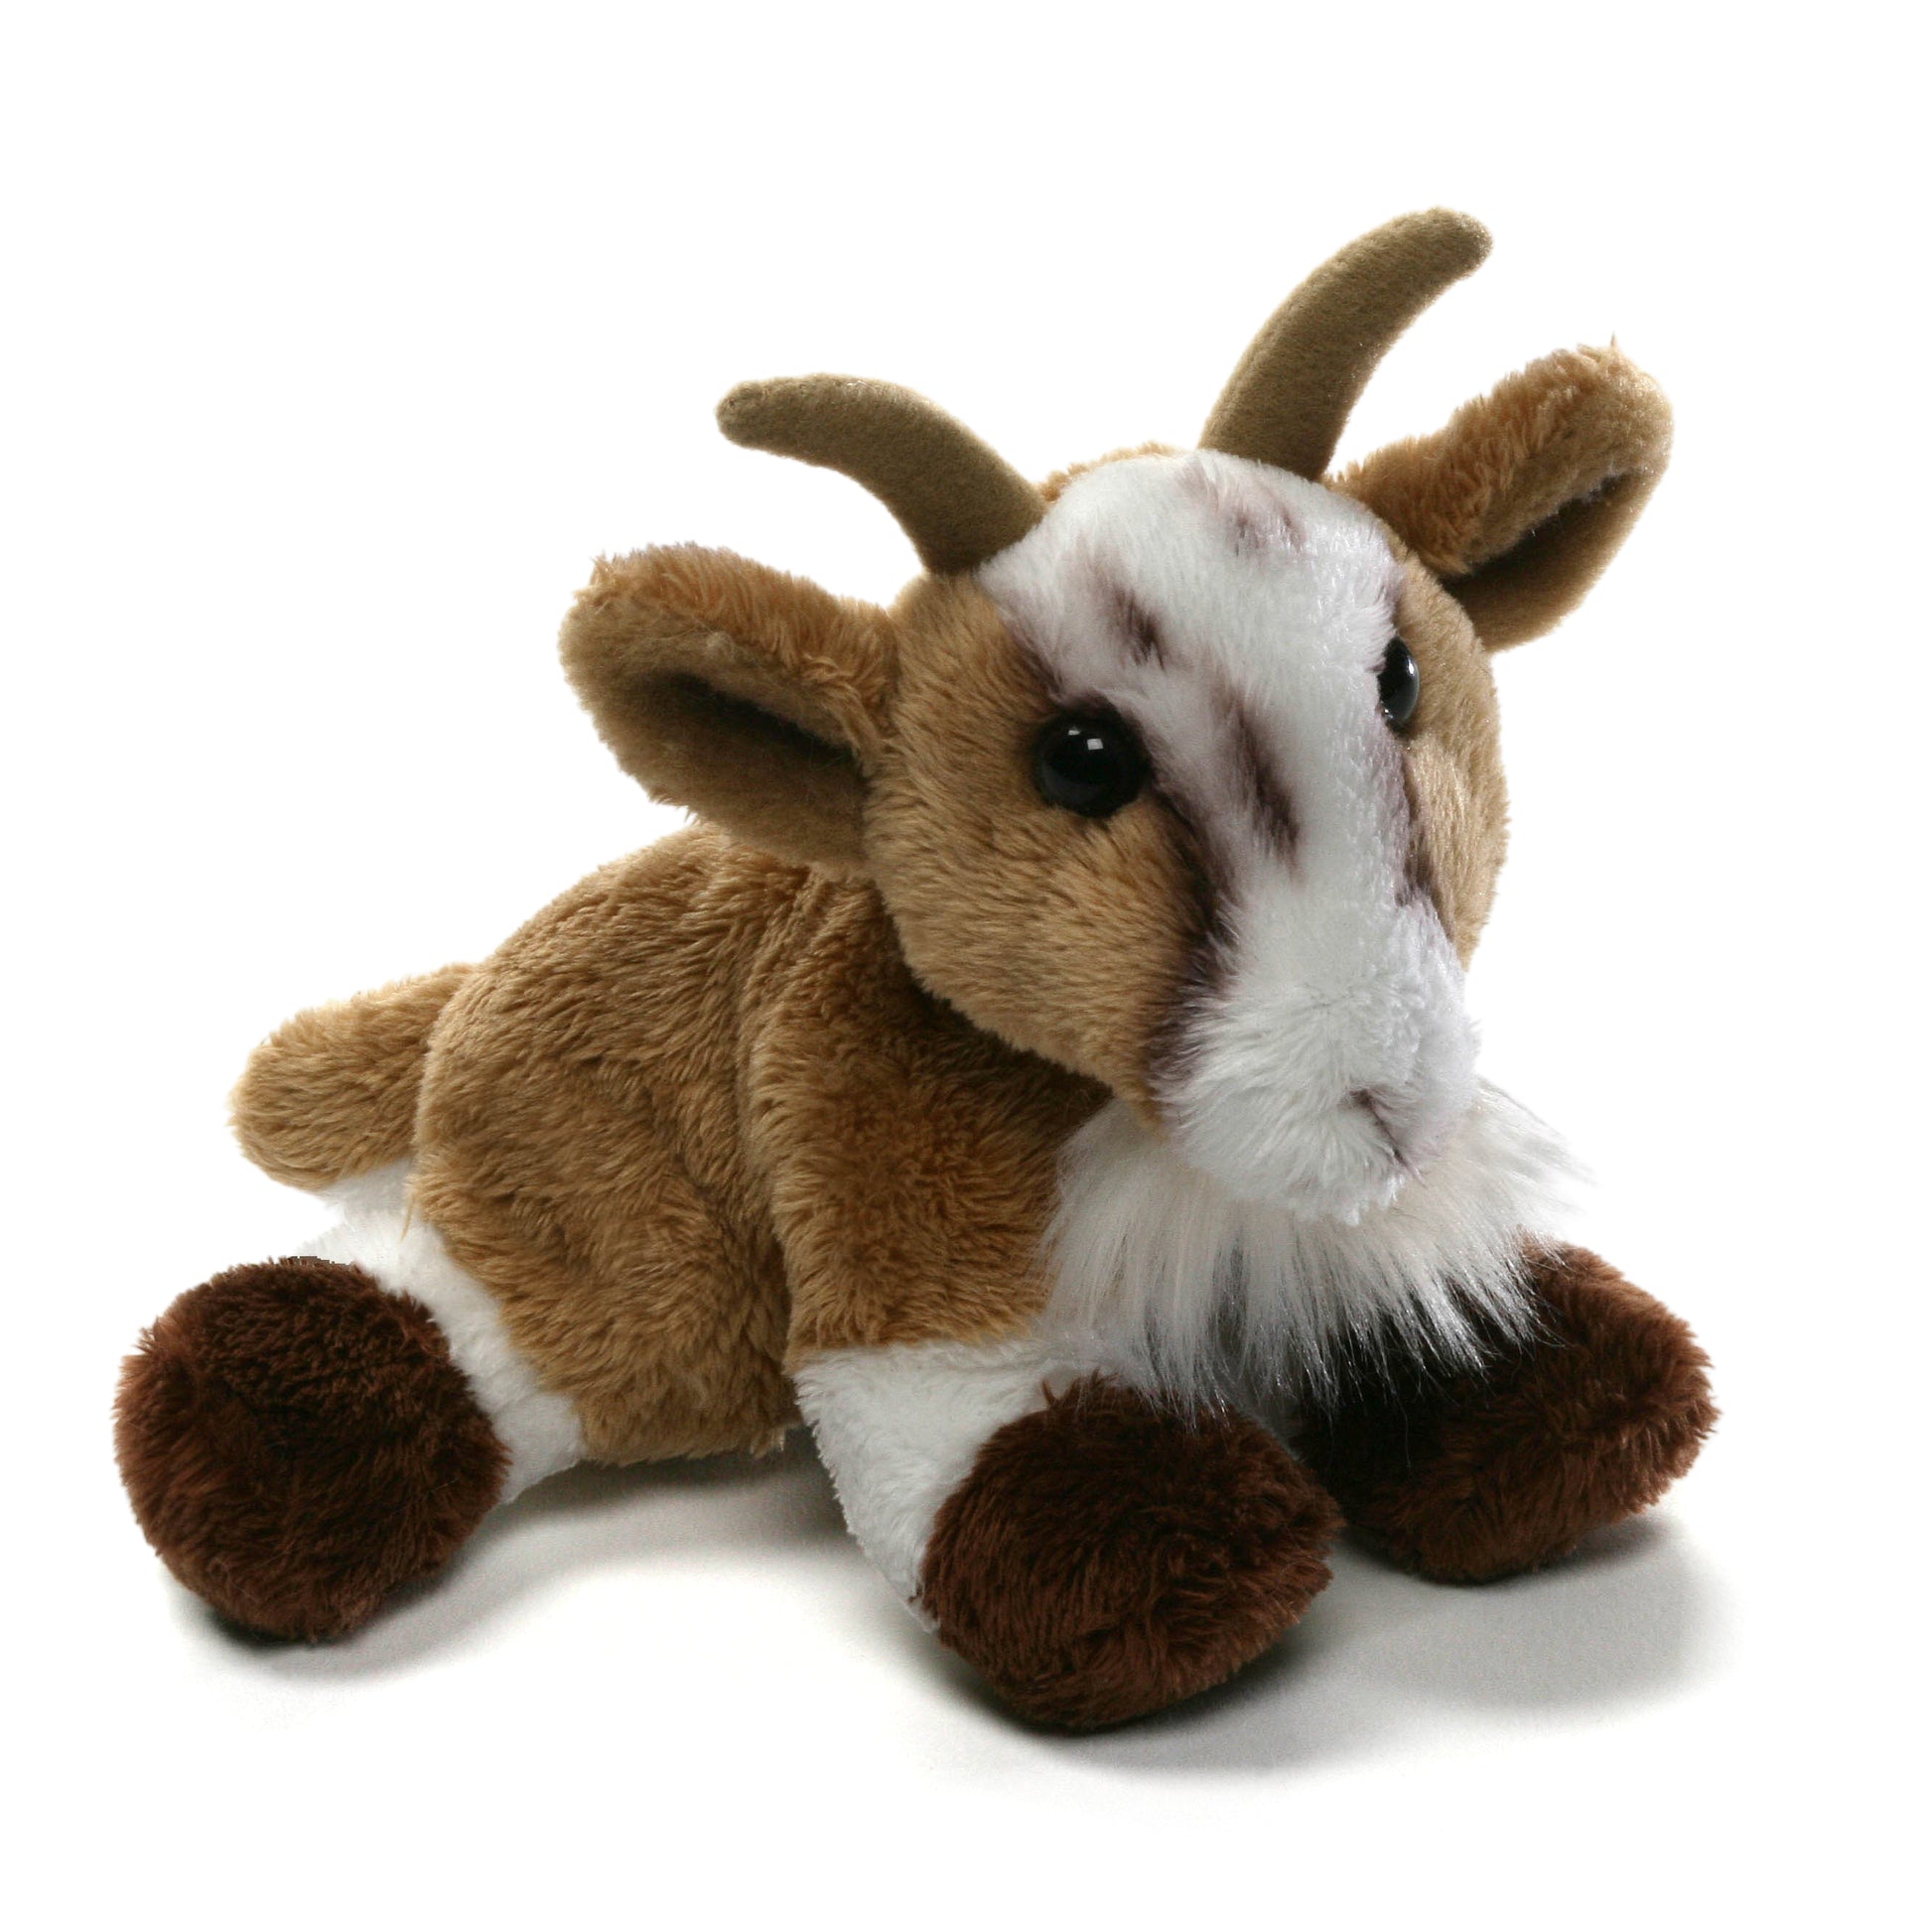 Goat - Farm Plush Toy - 6-in - Mellow Monkey